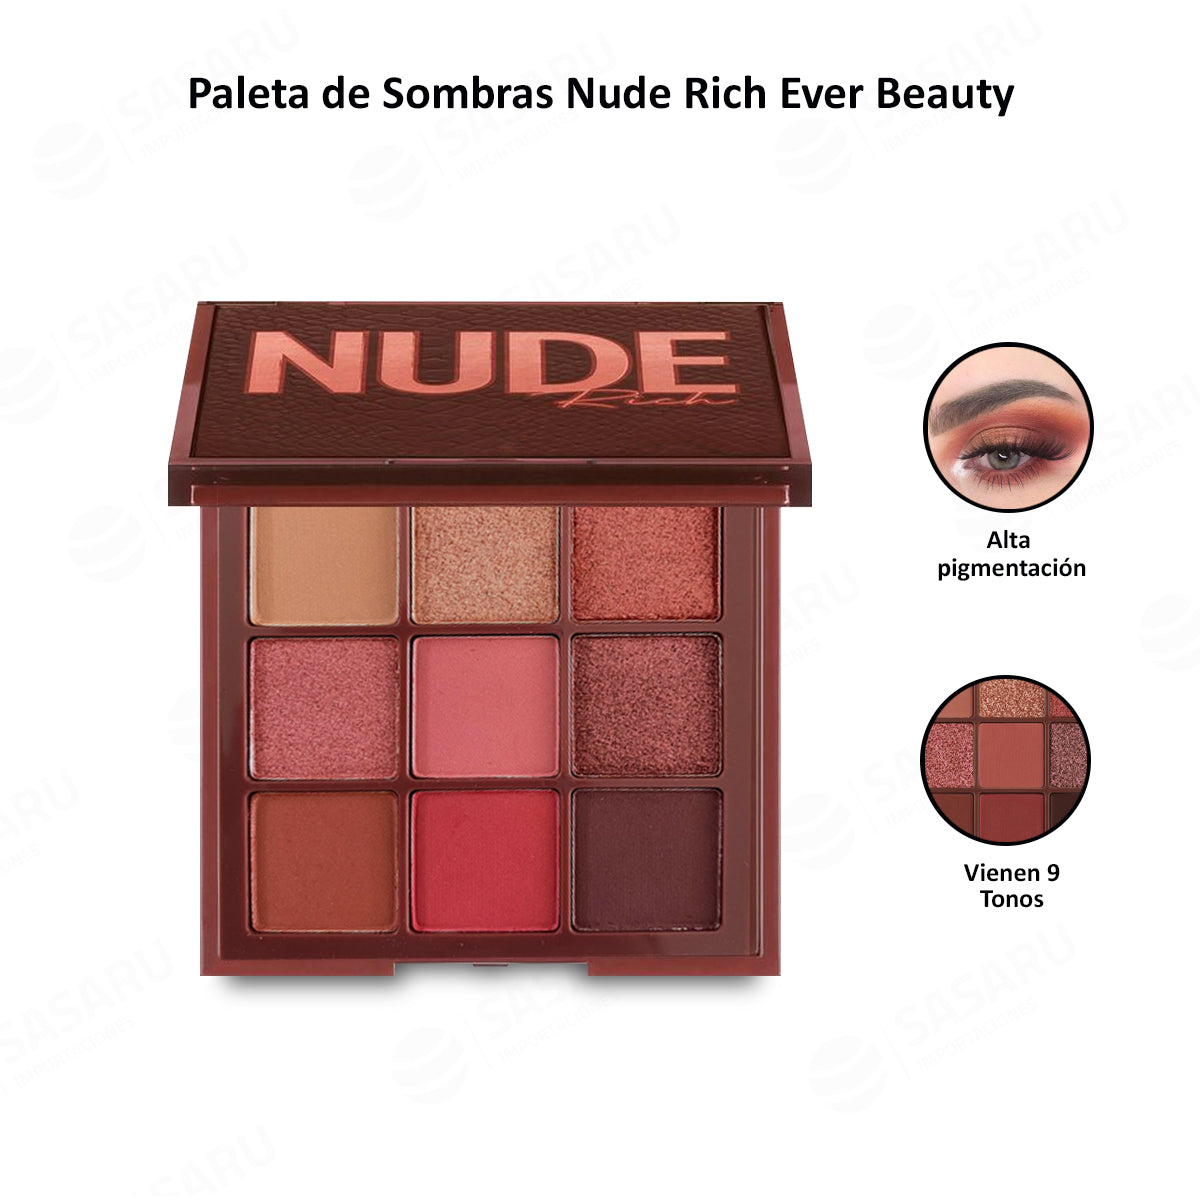 Paleta de Sombras Nude Ever Beauty